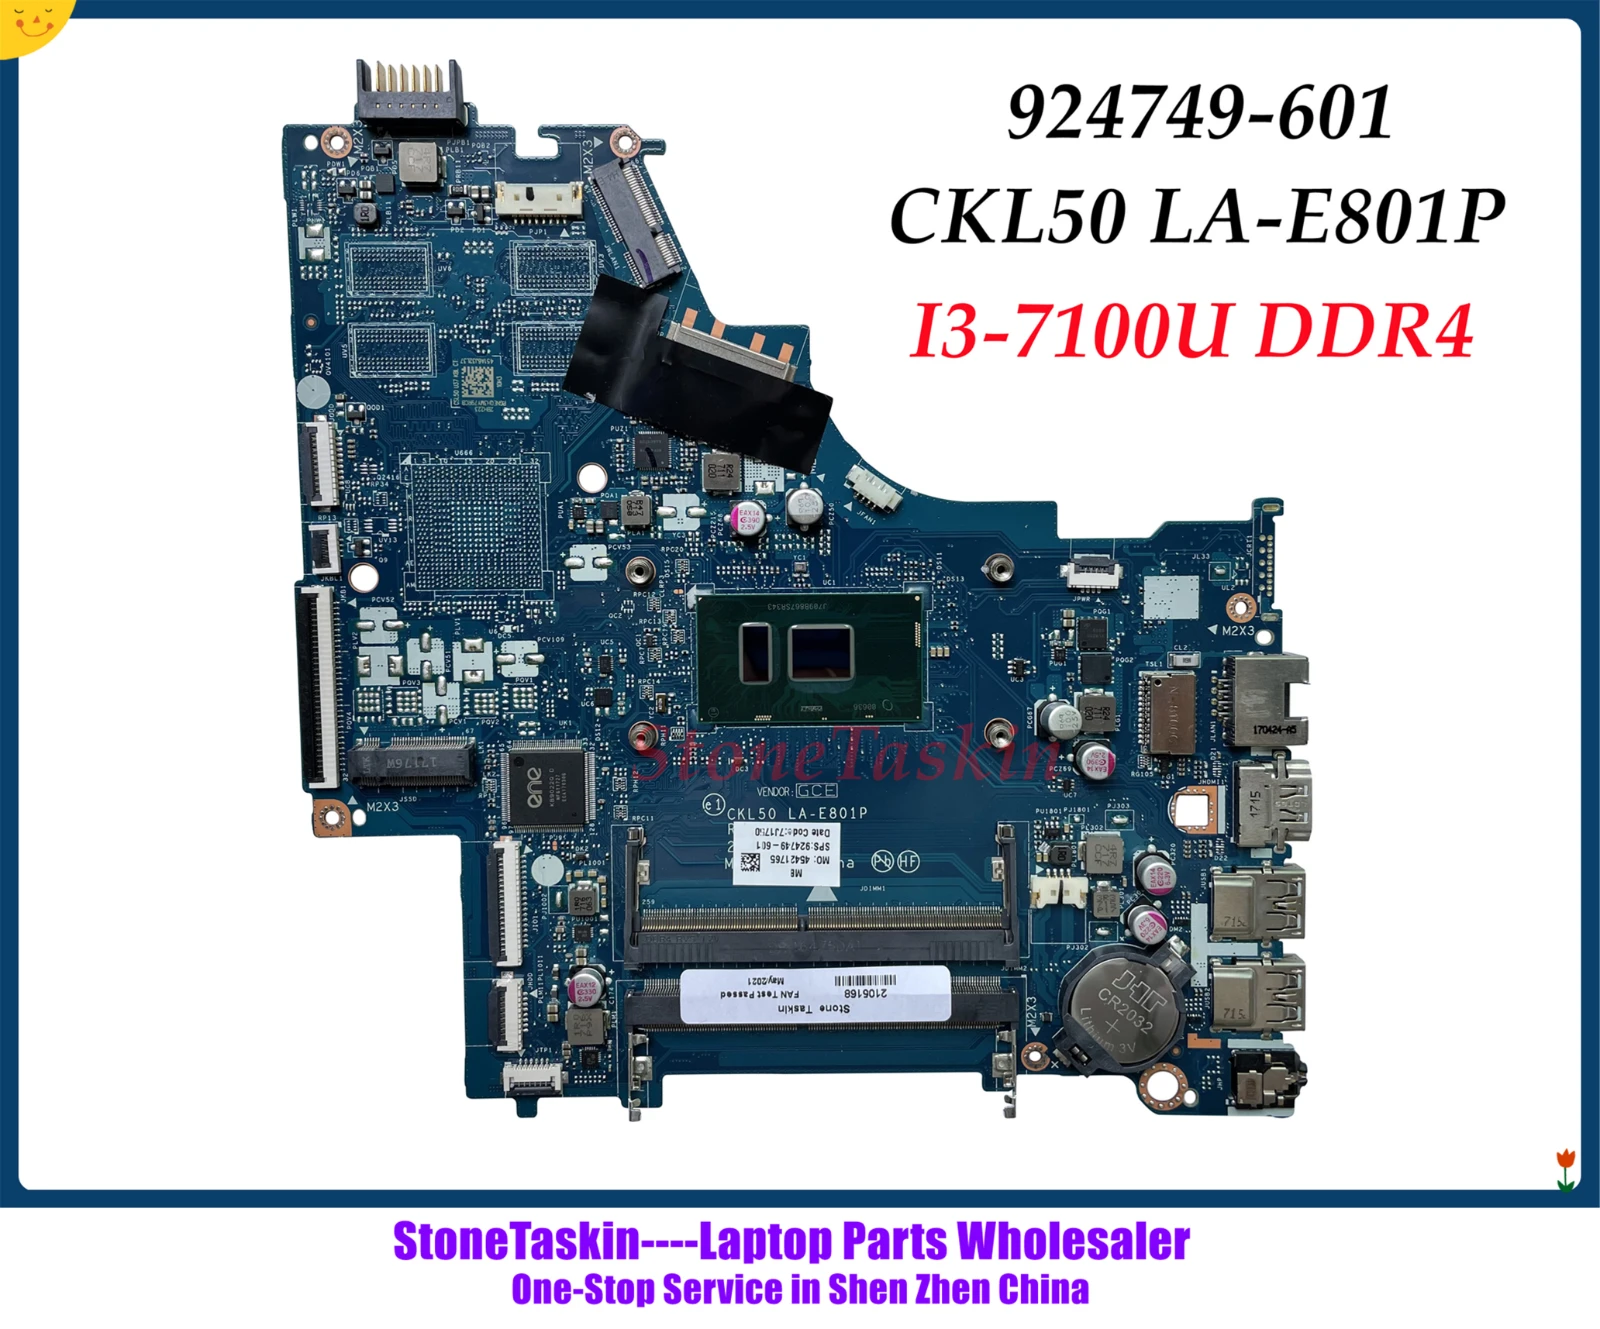 StoneTaskin 924749-601 Для HP Pavilion 15-BS Материнская плата ноутбука CSL50/CSL52 LA-E801P 924749-501 SR343 I3-7100U DDR4 100% Протестирована . ' - ' . 0